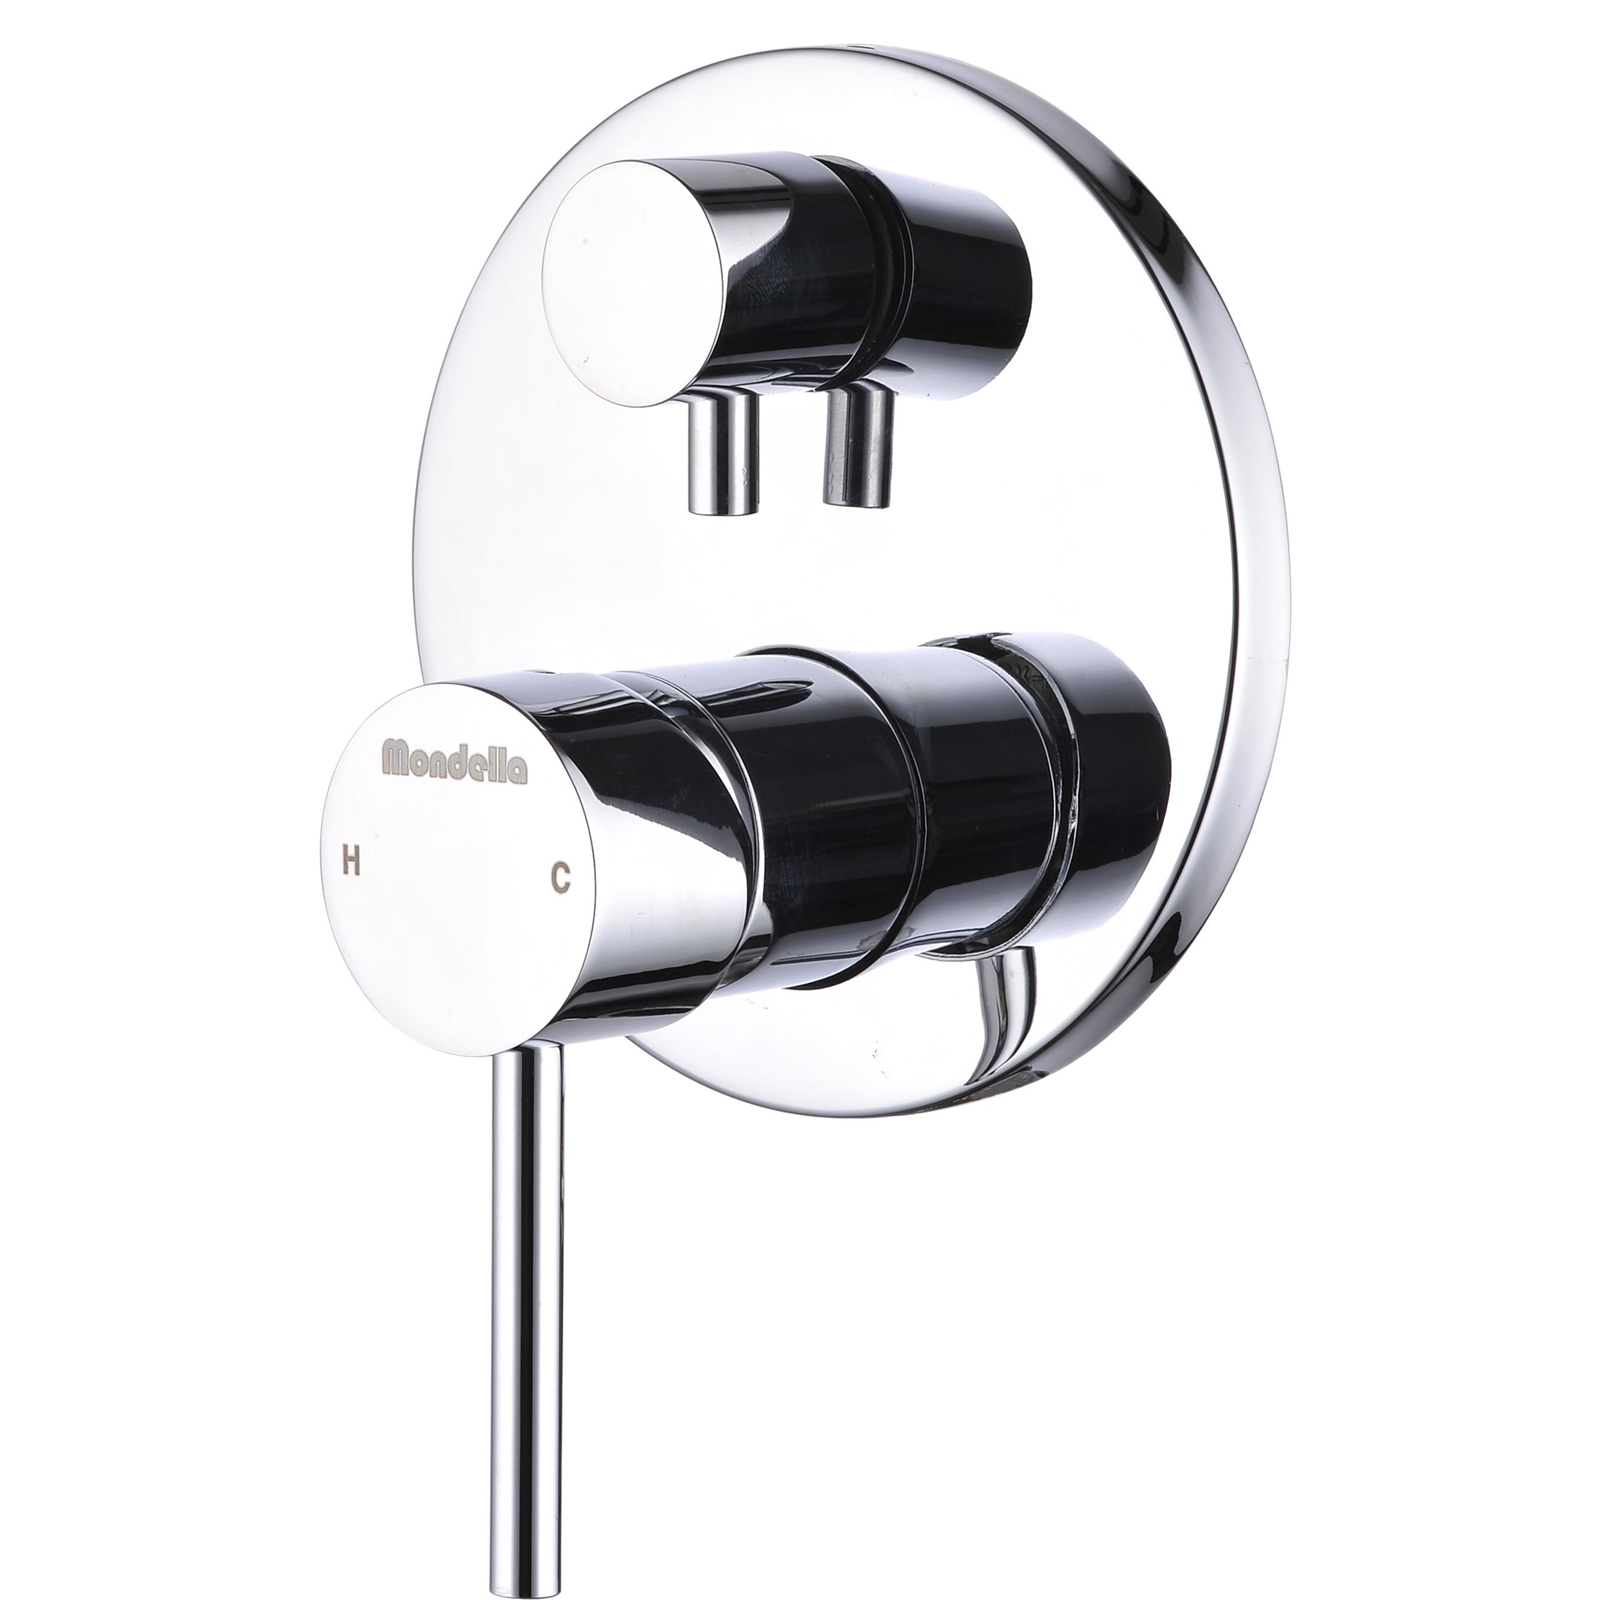 Mondella Chrome Resonance Pin Lever Diverter Bath And Shower Mixer